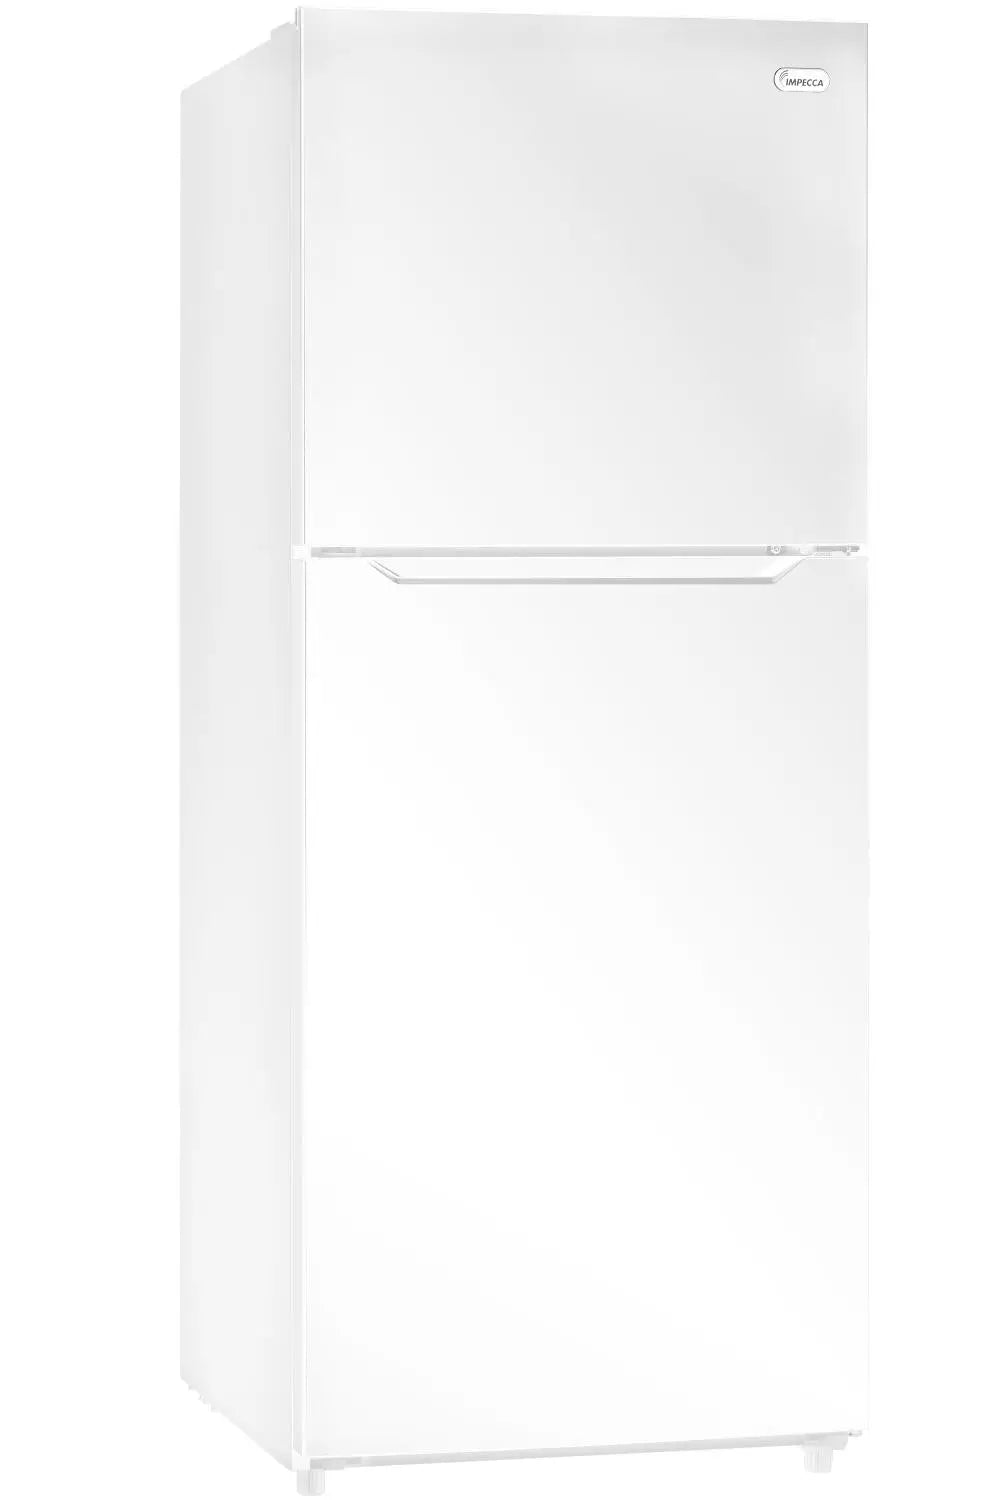 10.1 Cu. Ft. Apartment Refrigerator - Top Mount Freezer, White | Impecca | Fridge.com